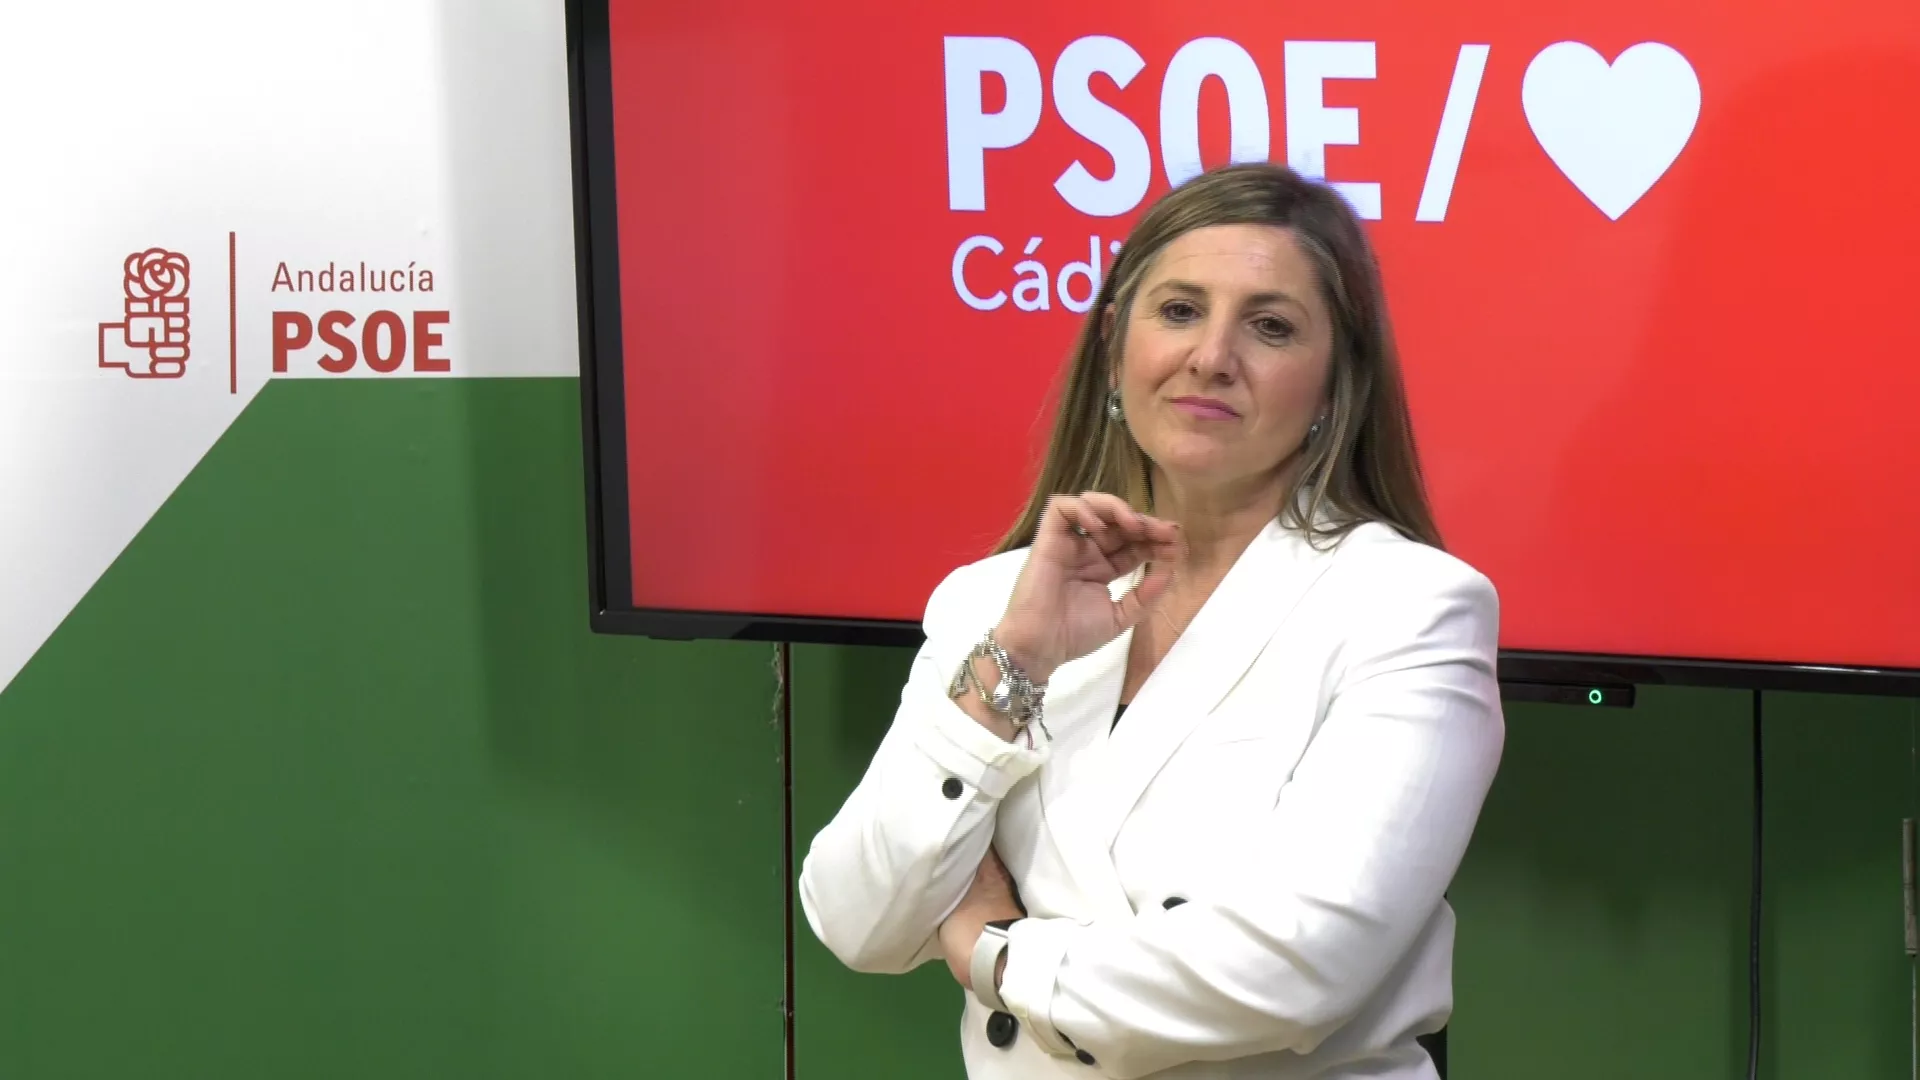 La presidenta de Diputación encabeza la lista socialista al Parlamento por Cádiz 